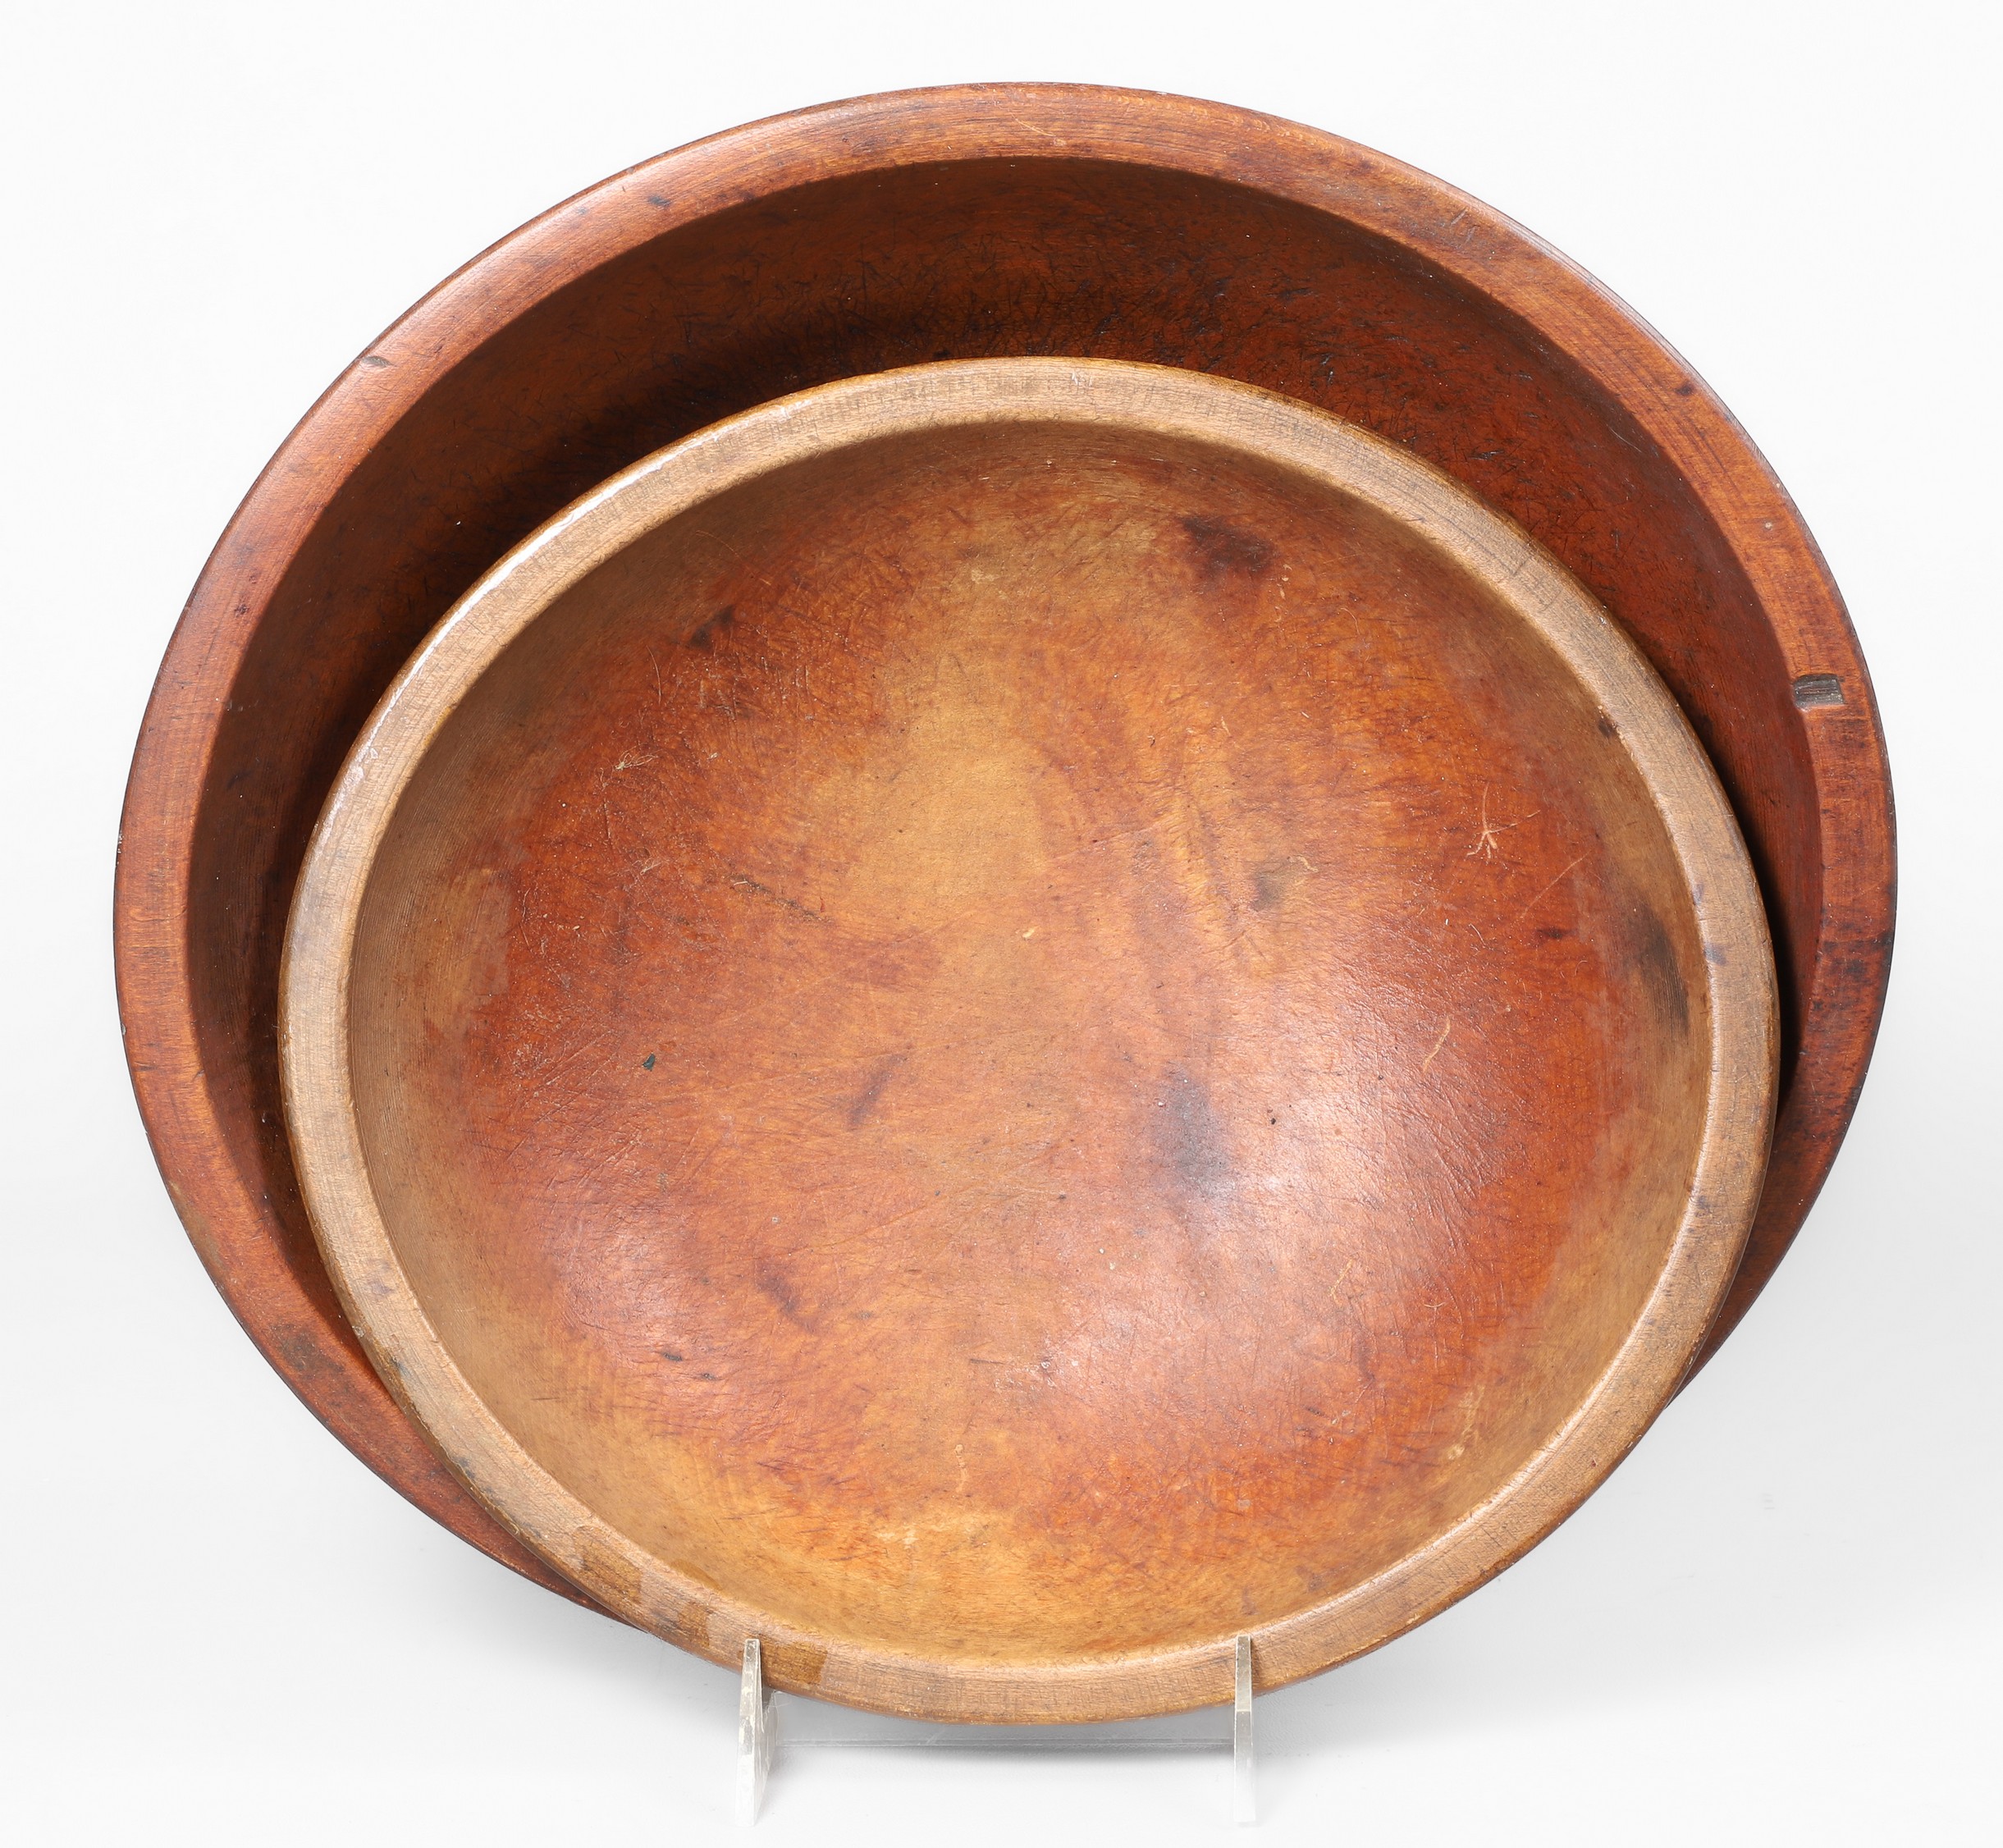 (2) Carved wood bowls, 11-1/4"